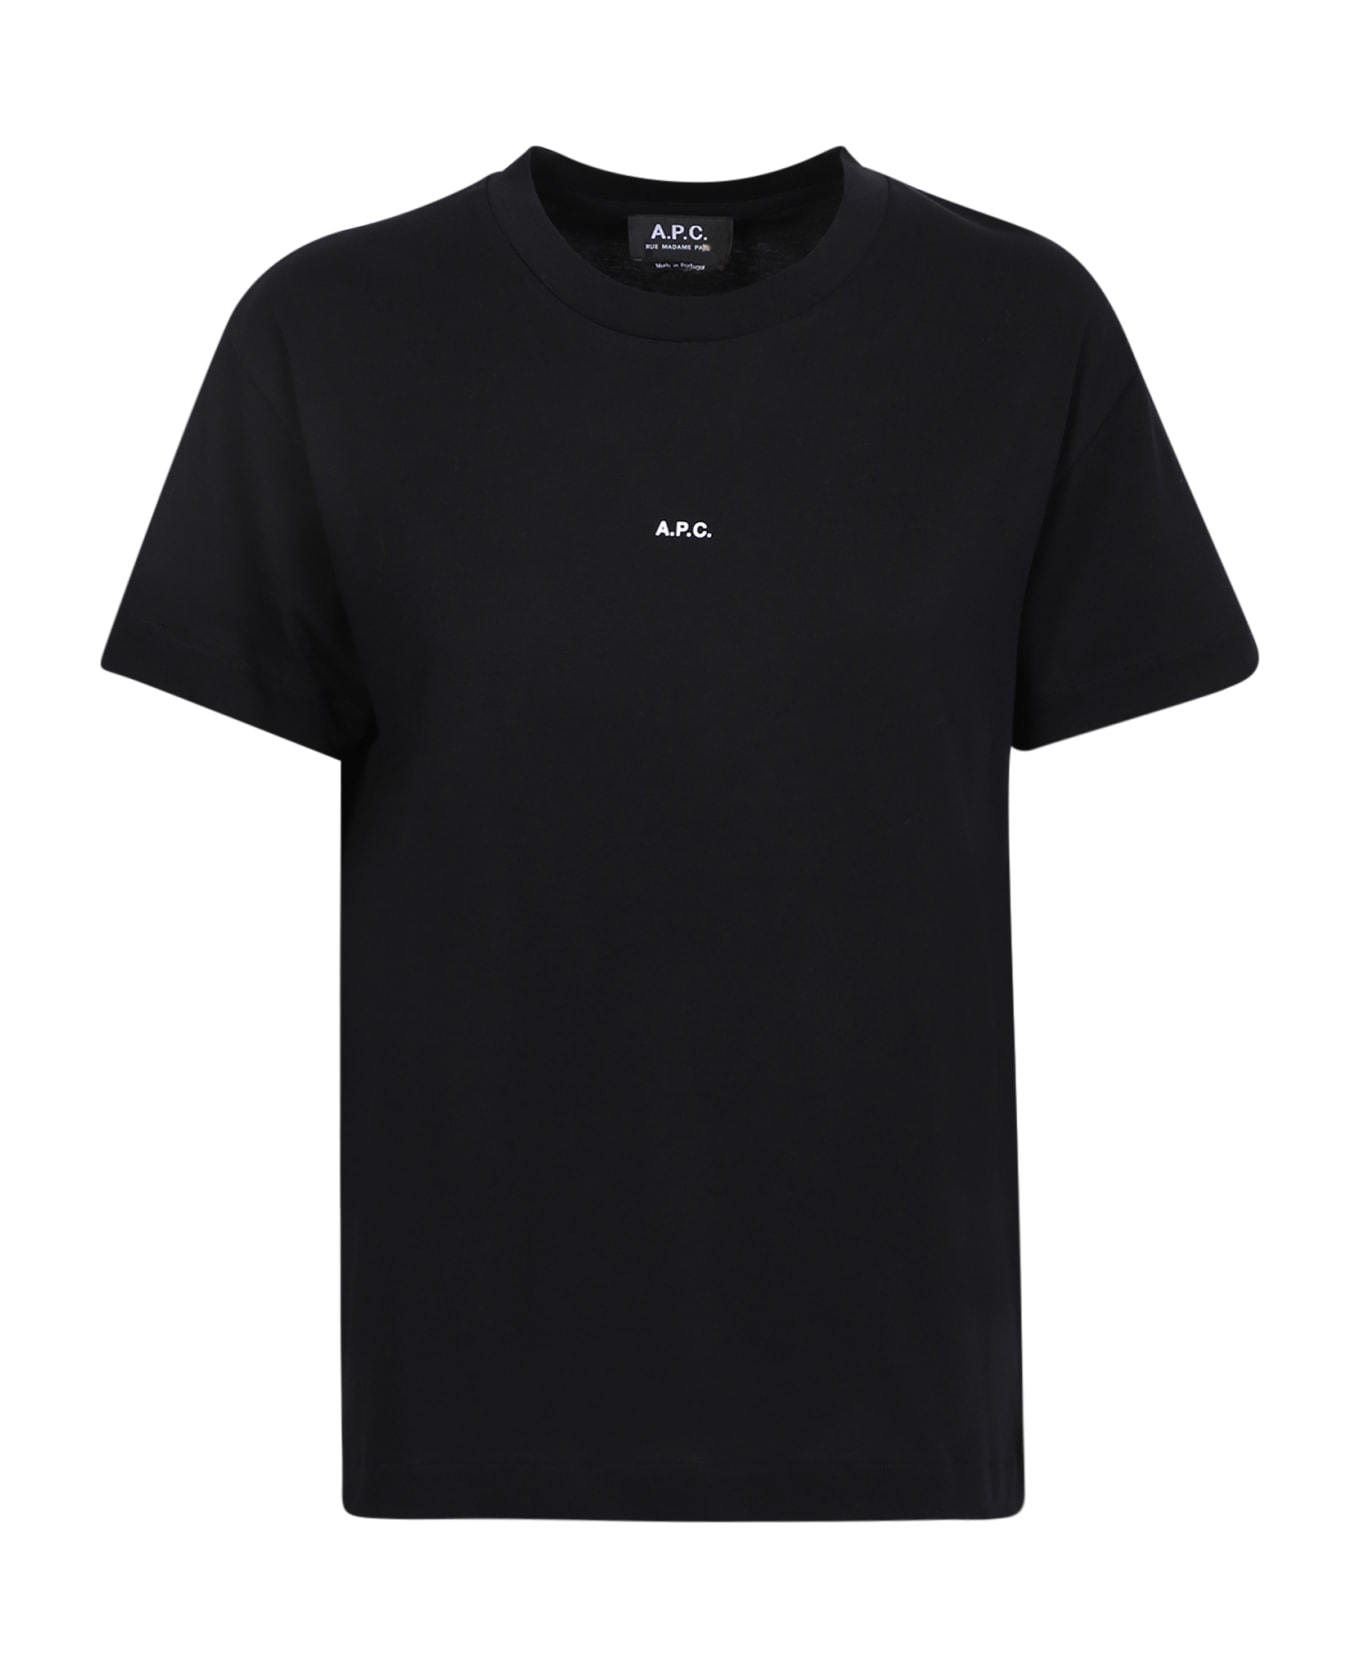 A.P.C. Jade T-shirt - Black